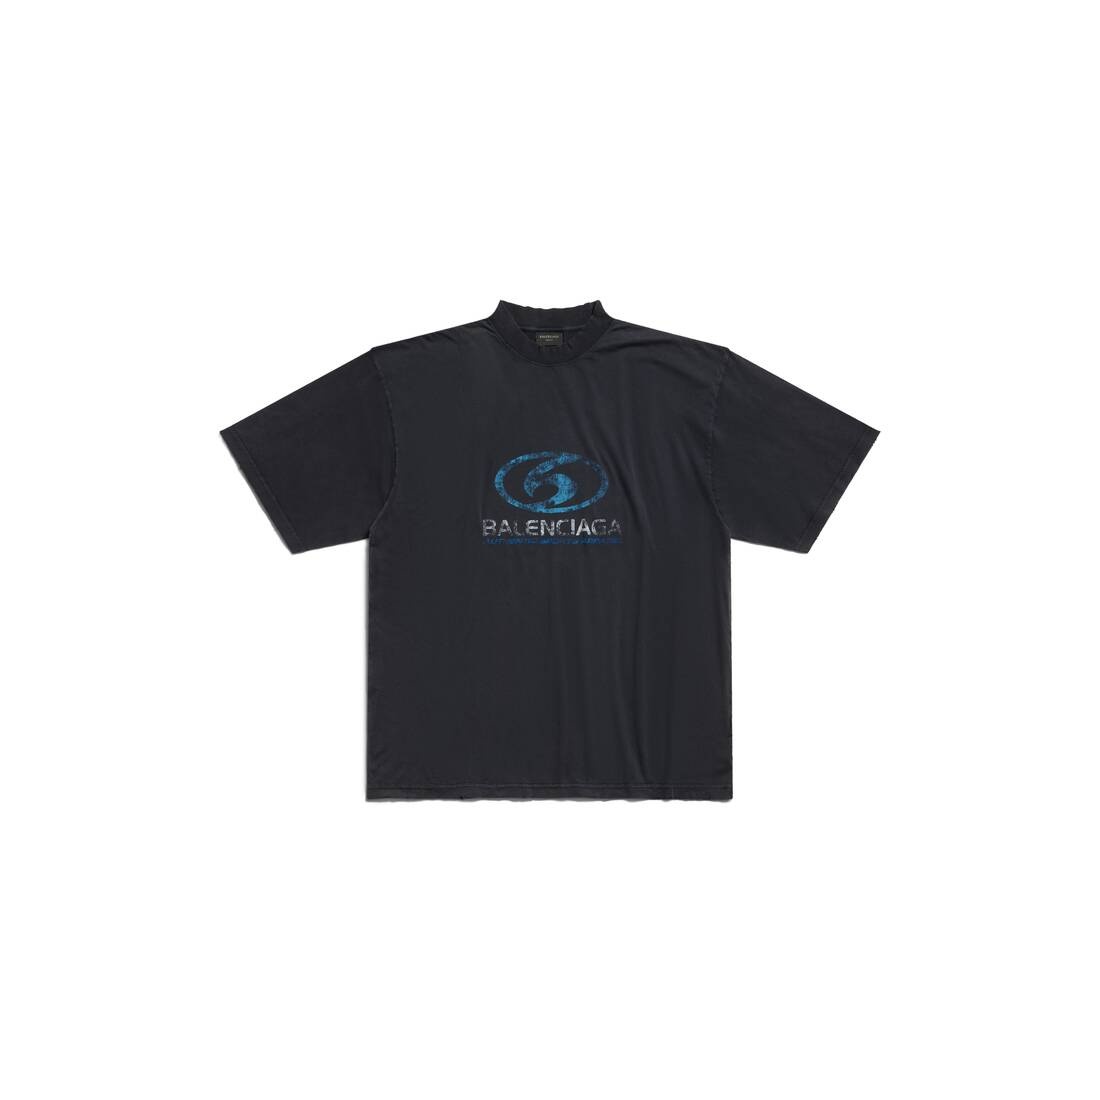 Surfer T-shirt Medium Fit in Black/blue - 1